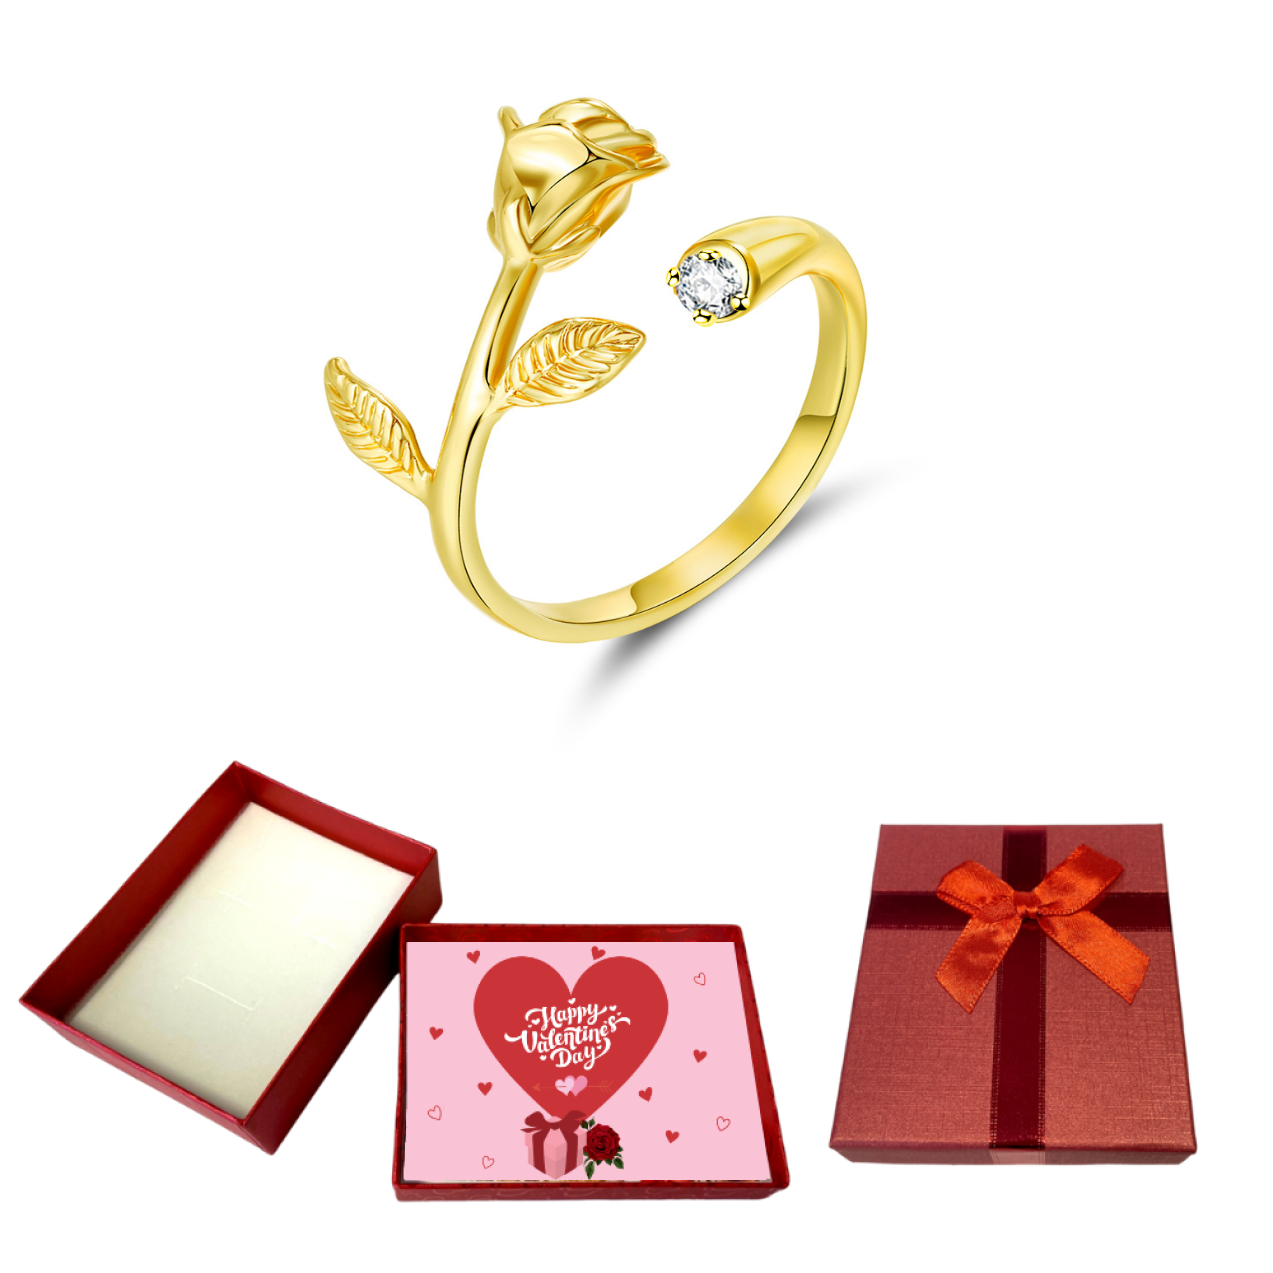 10 pcs - Golden Rose Flower with Zirconia Crystal Open Ring Adjustable With Valentine Gift Box|GCJ333-Valentine Box|UK SELLER